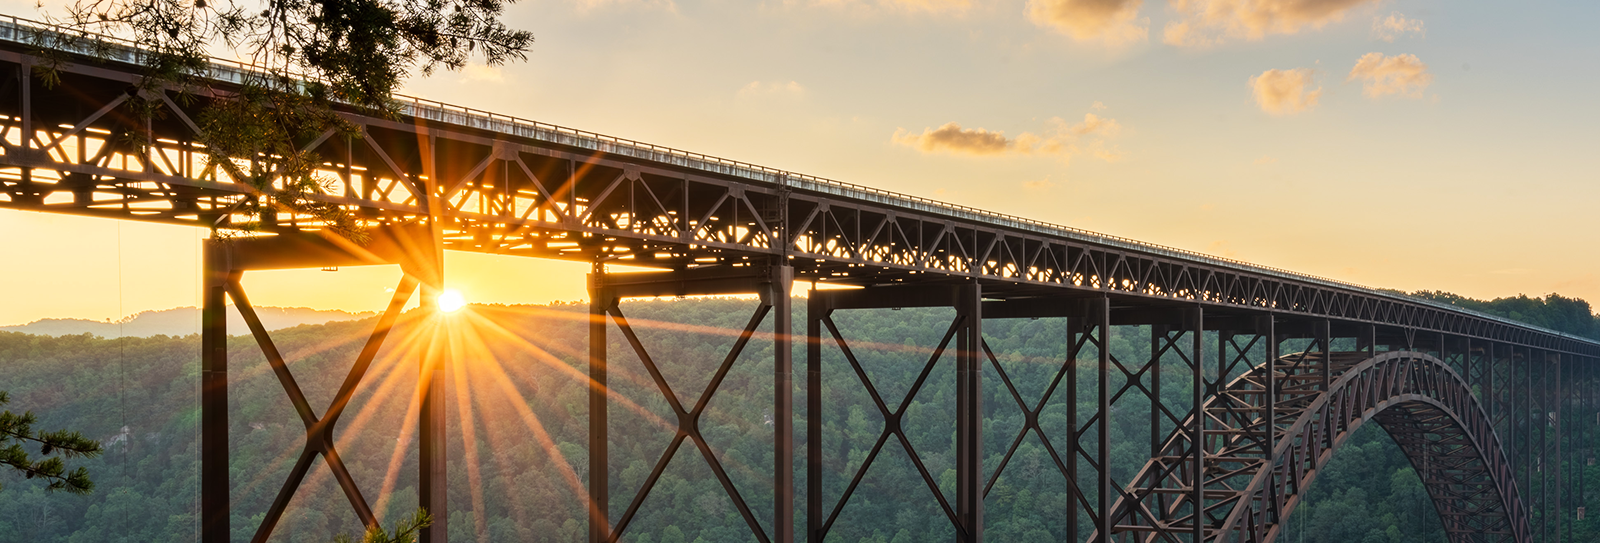 Bridge image with sunset behind